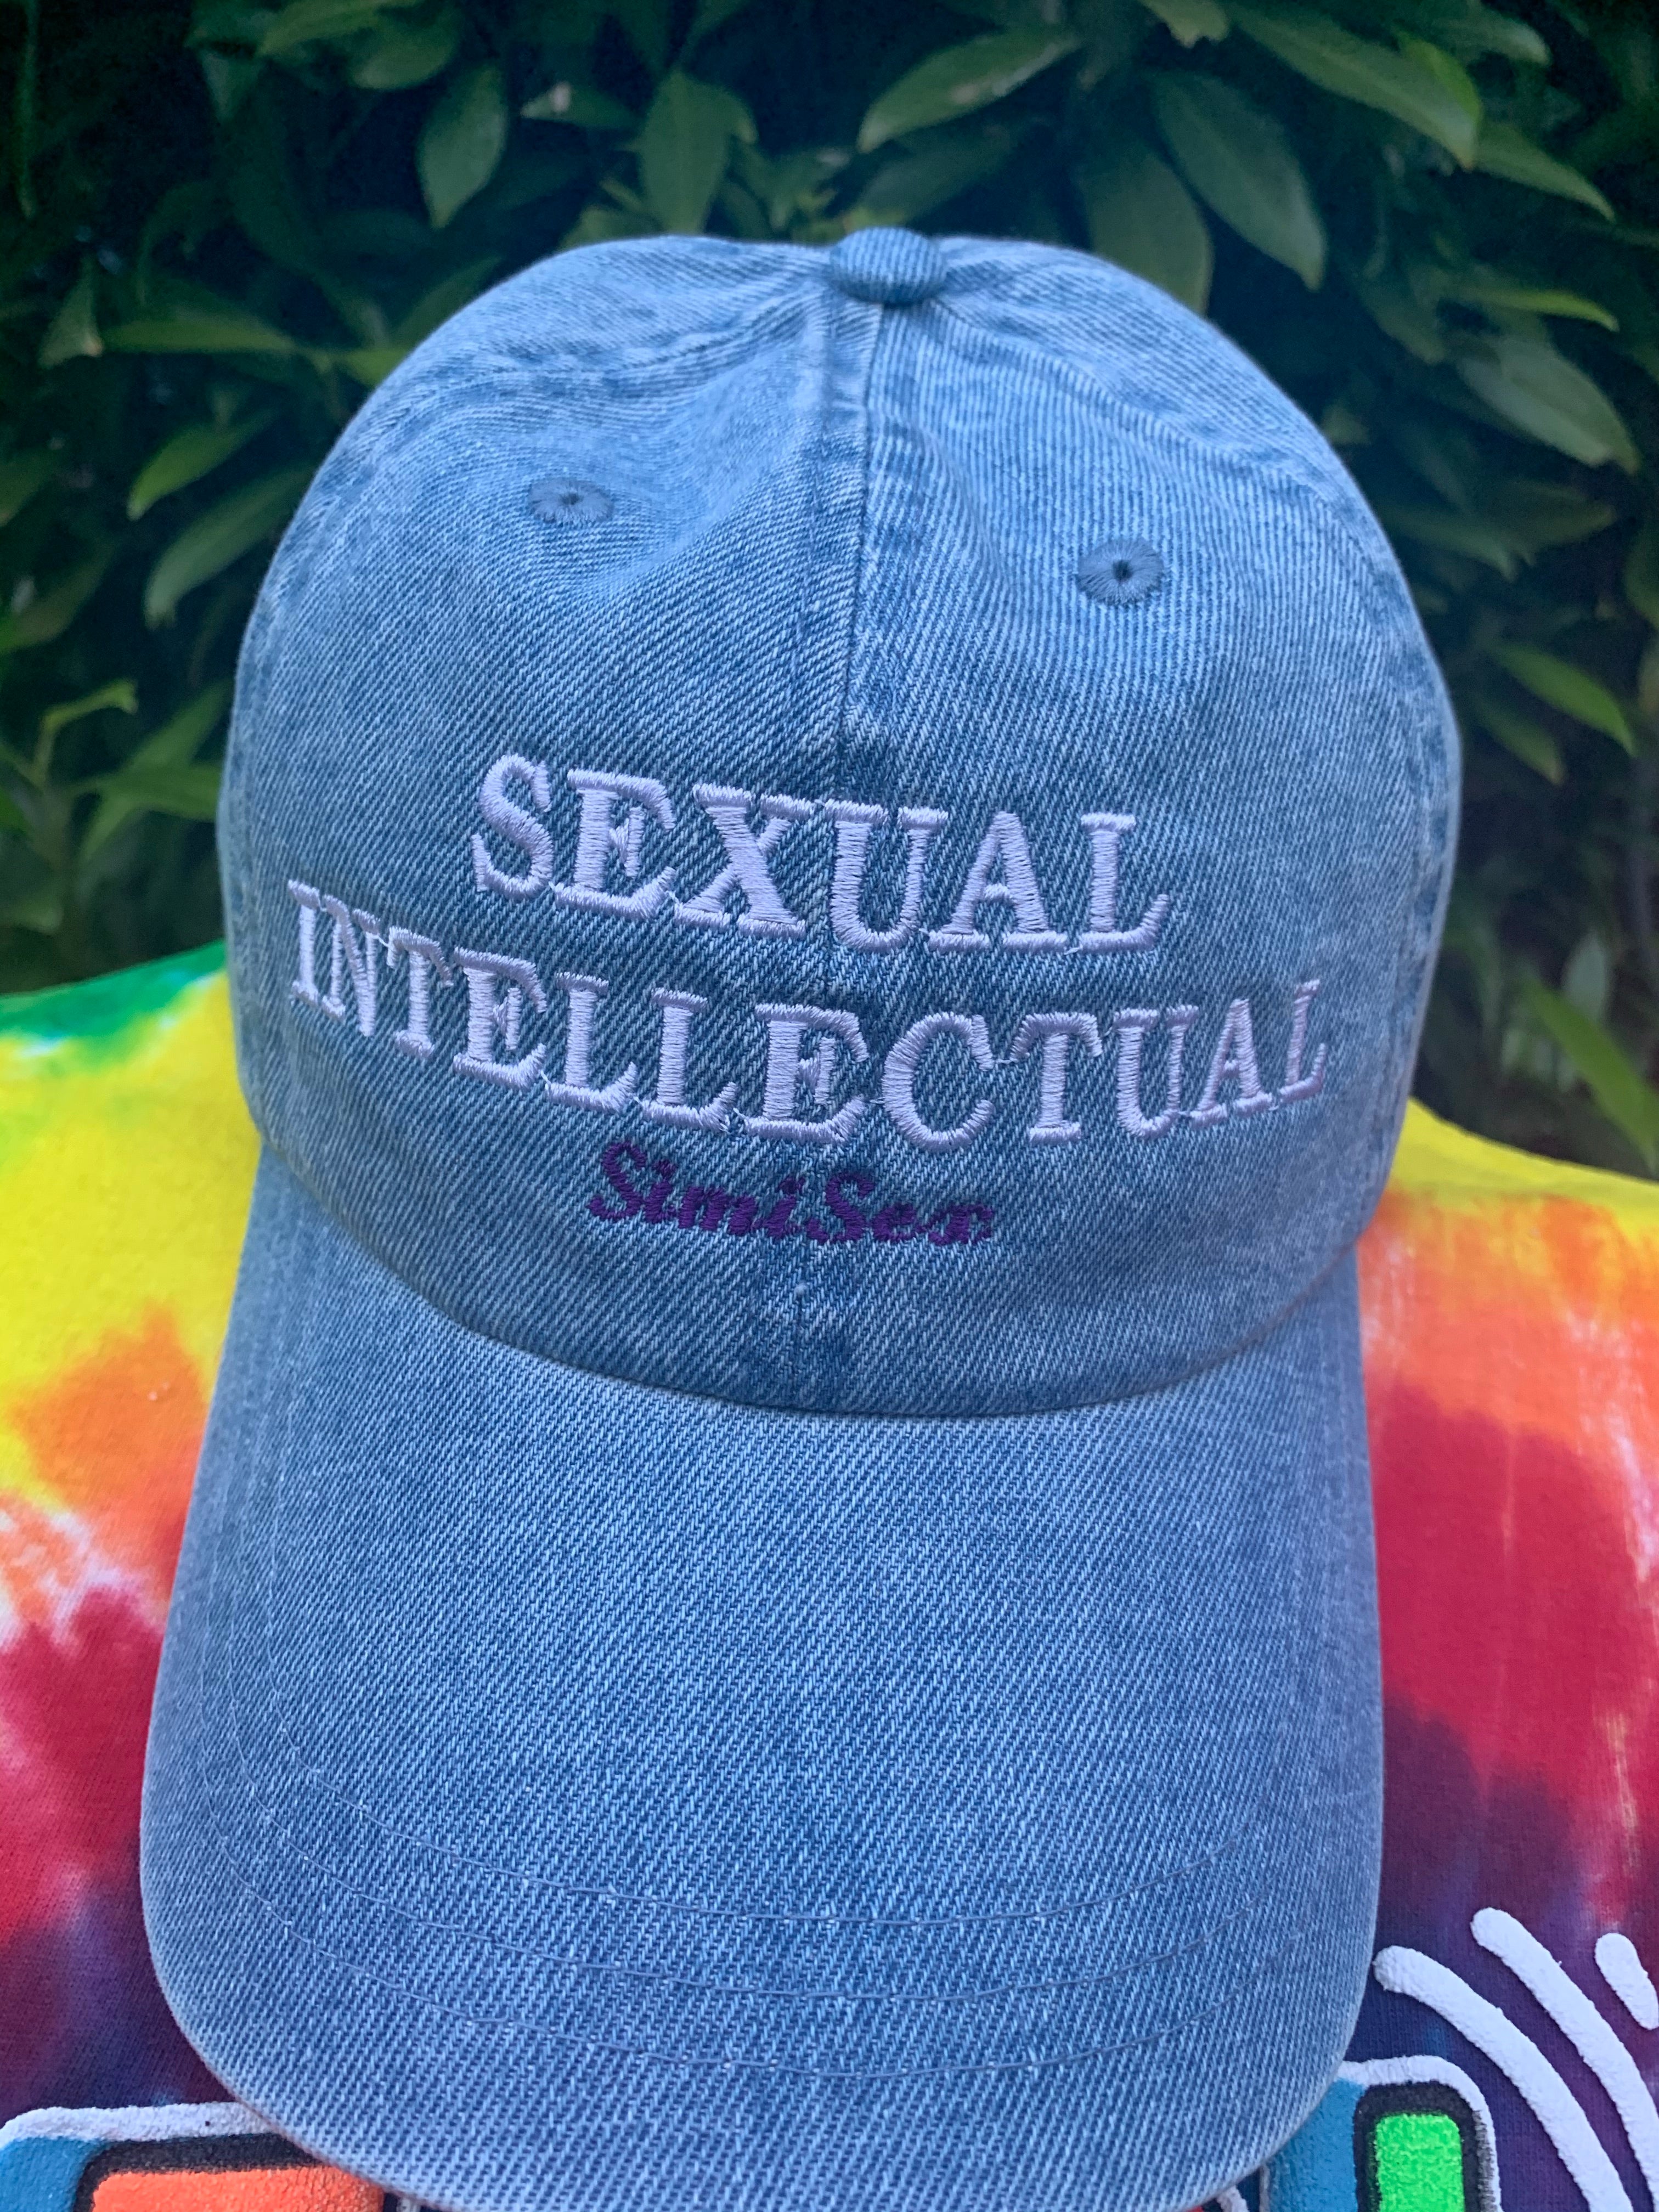 Sexual Intellectual white denim hat